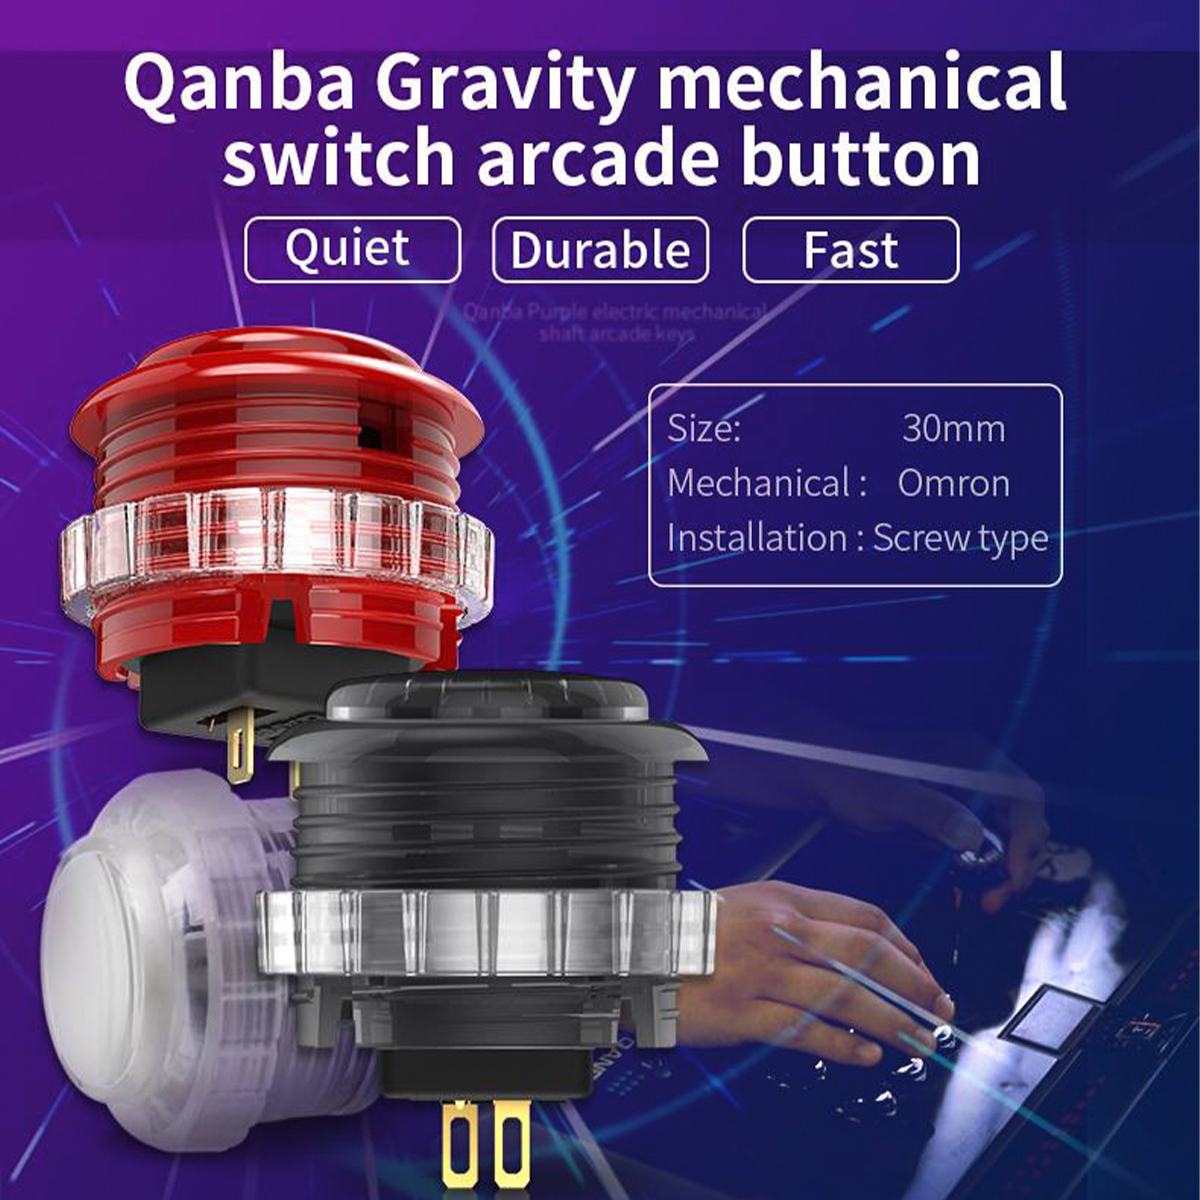 QANBA GRAVITY CLEAR 30mm Mechanical Pushbutton